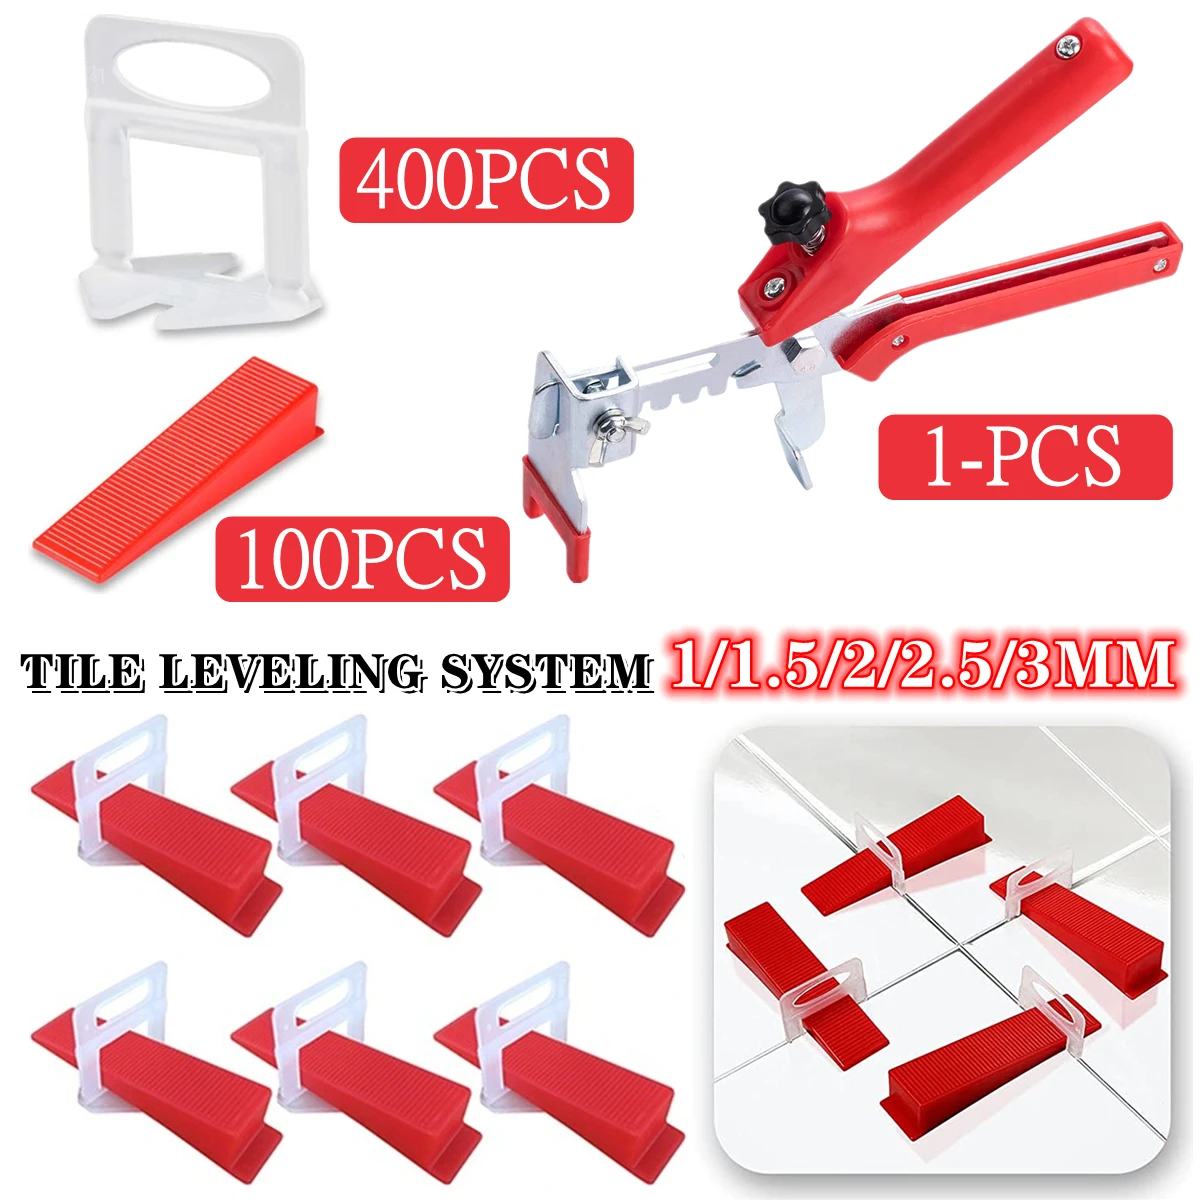 Tile Leveling System Kit - 400Pcs Tile leveler Spacers Clips+100Pcs Reusable Wedge+1Pcs Pliers for Tile Laying Construction Tool